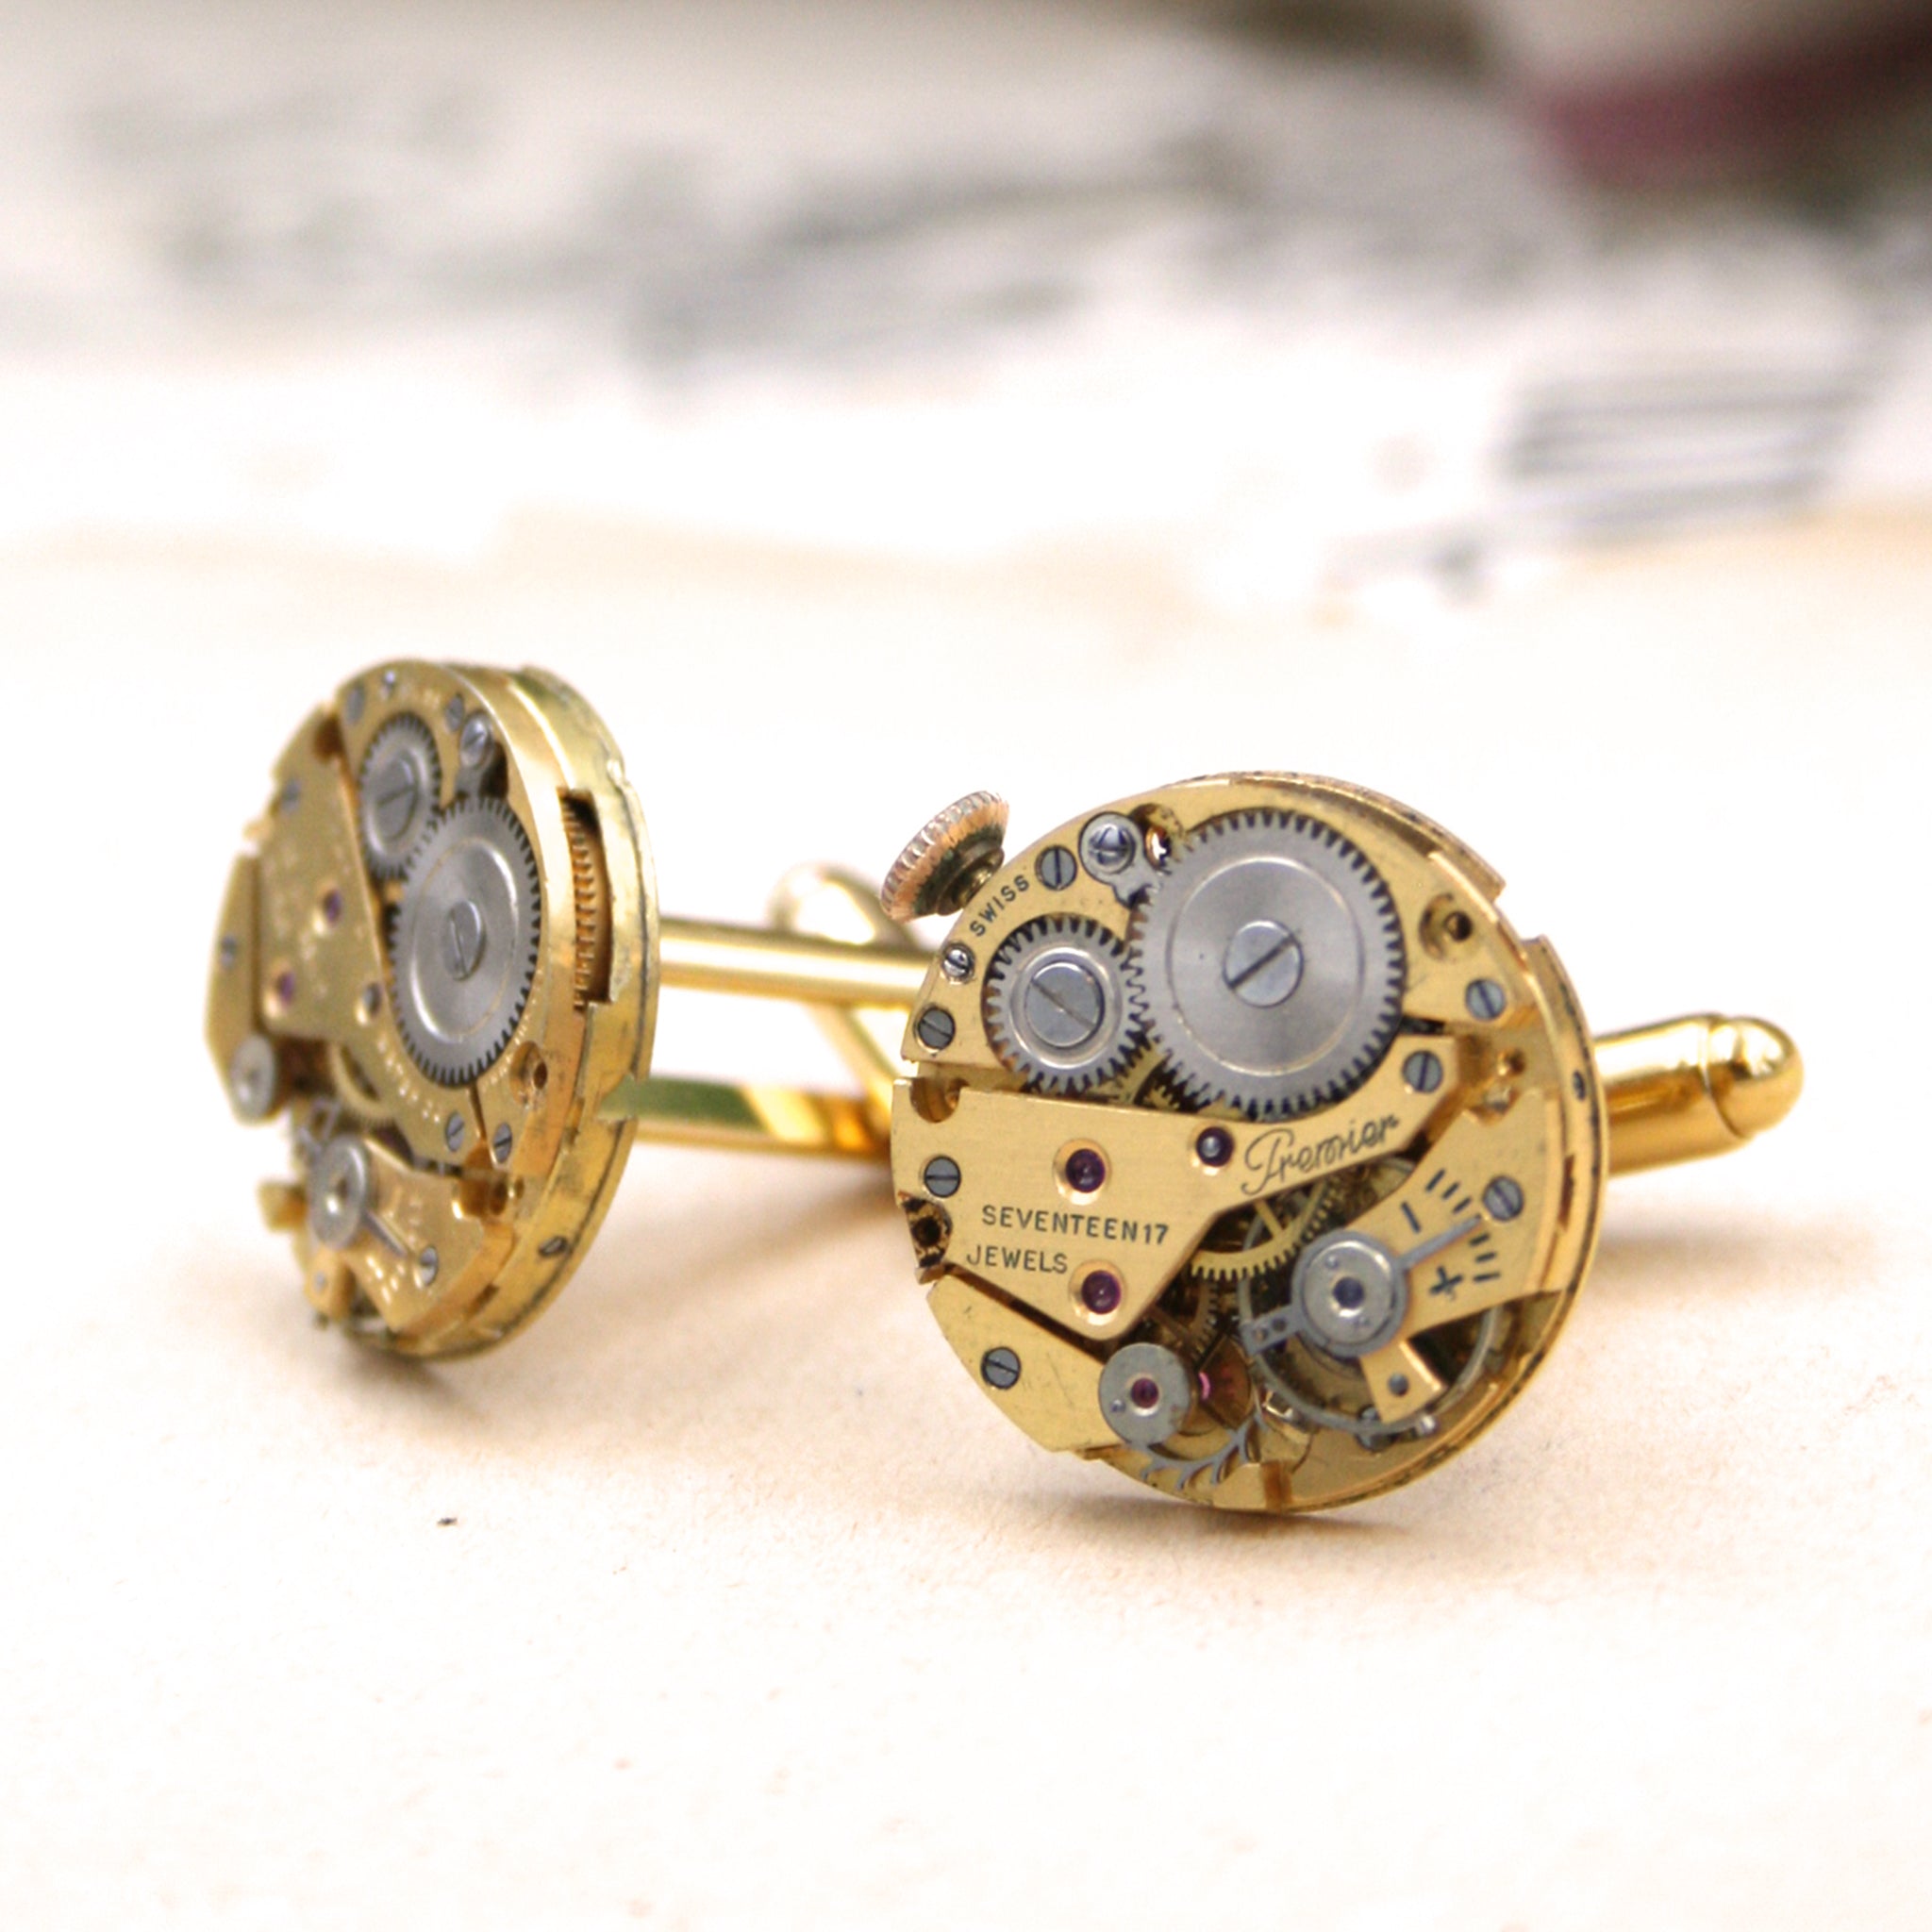 gold steampunk cufflinks featuring antique watch movements